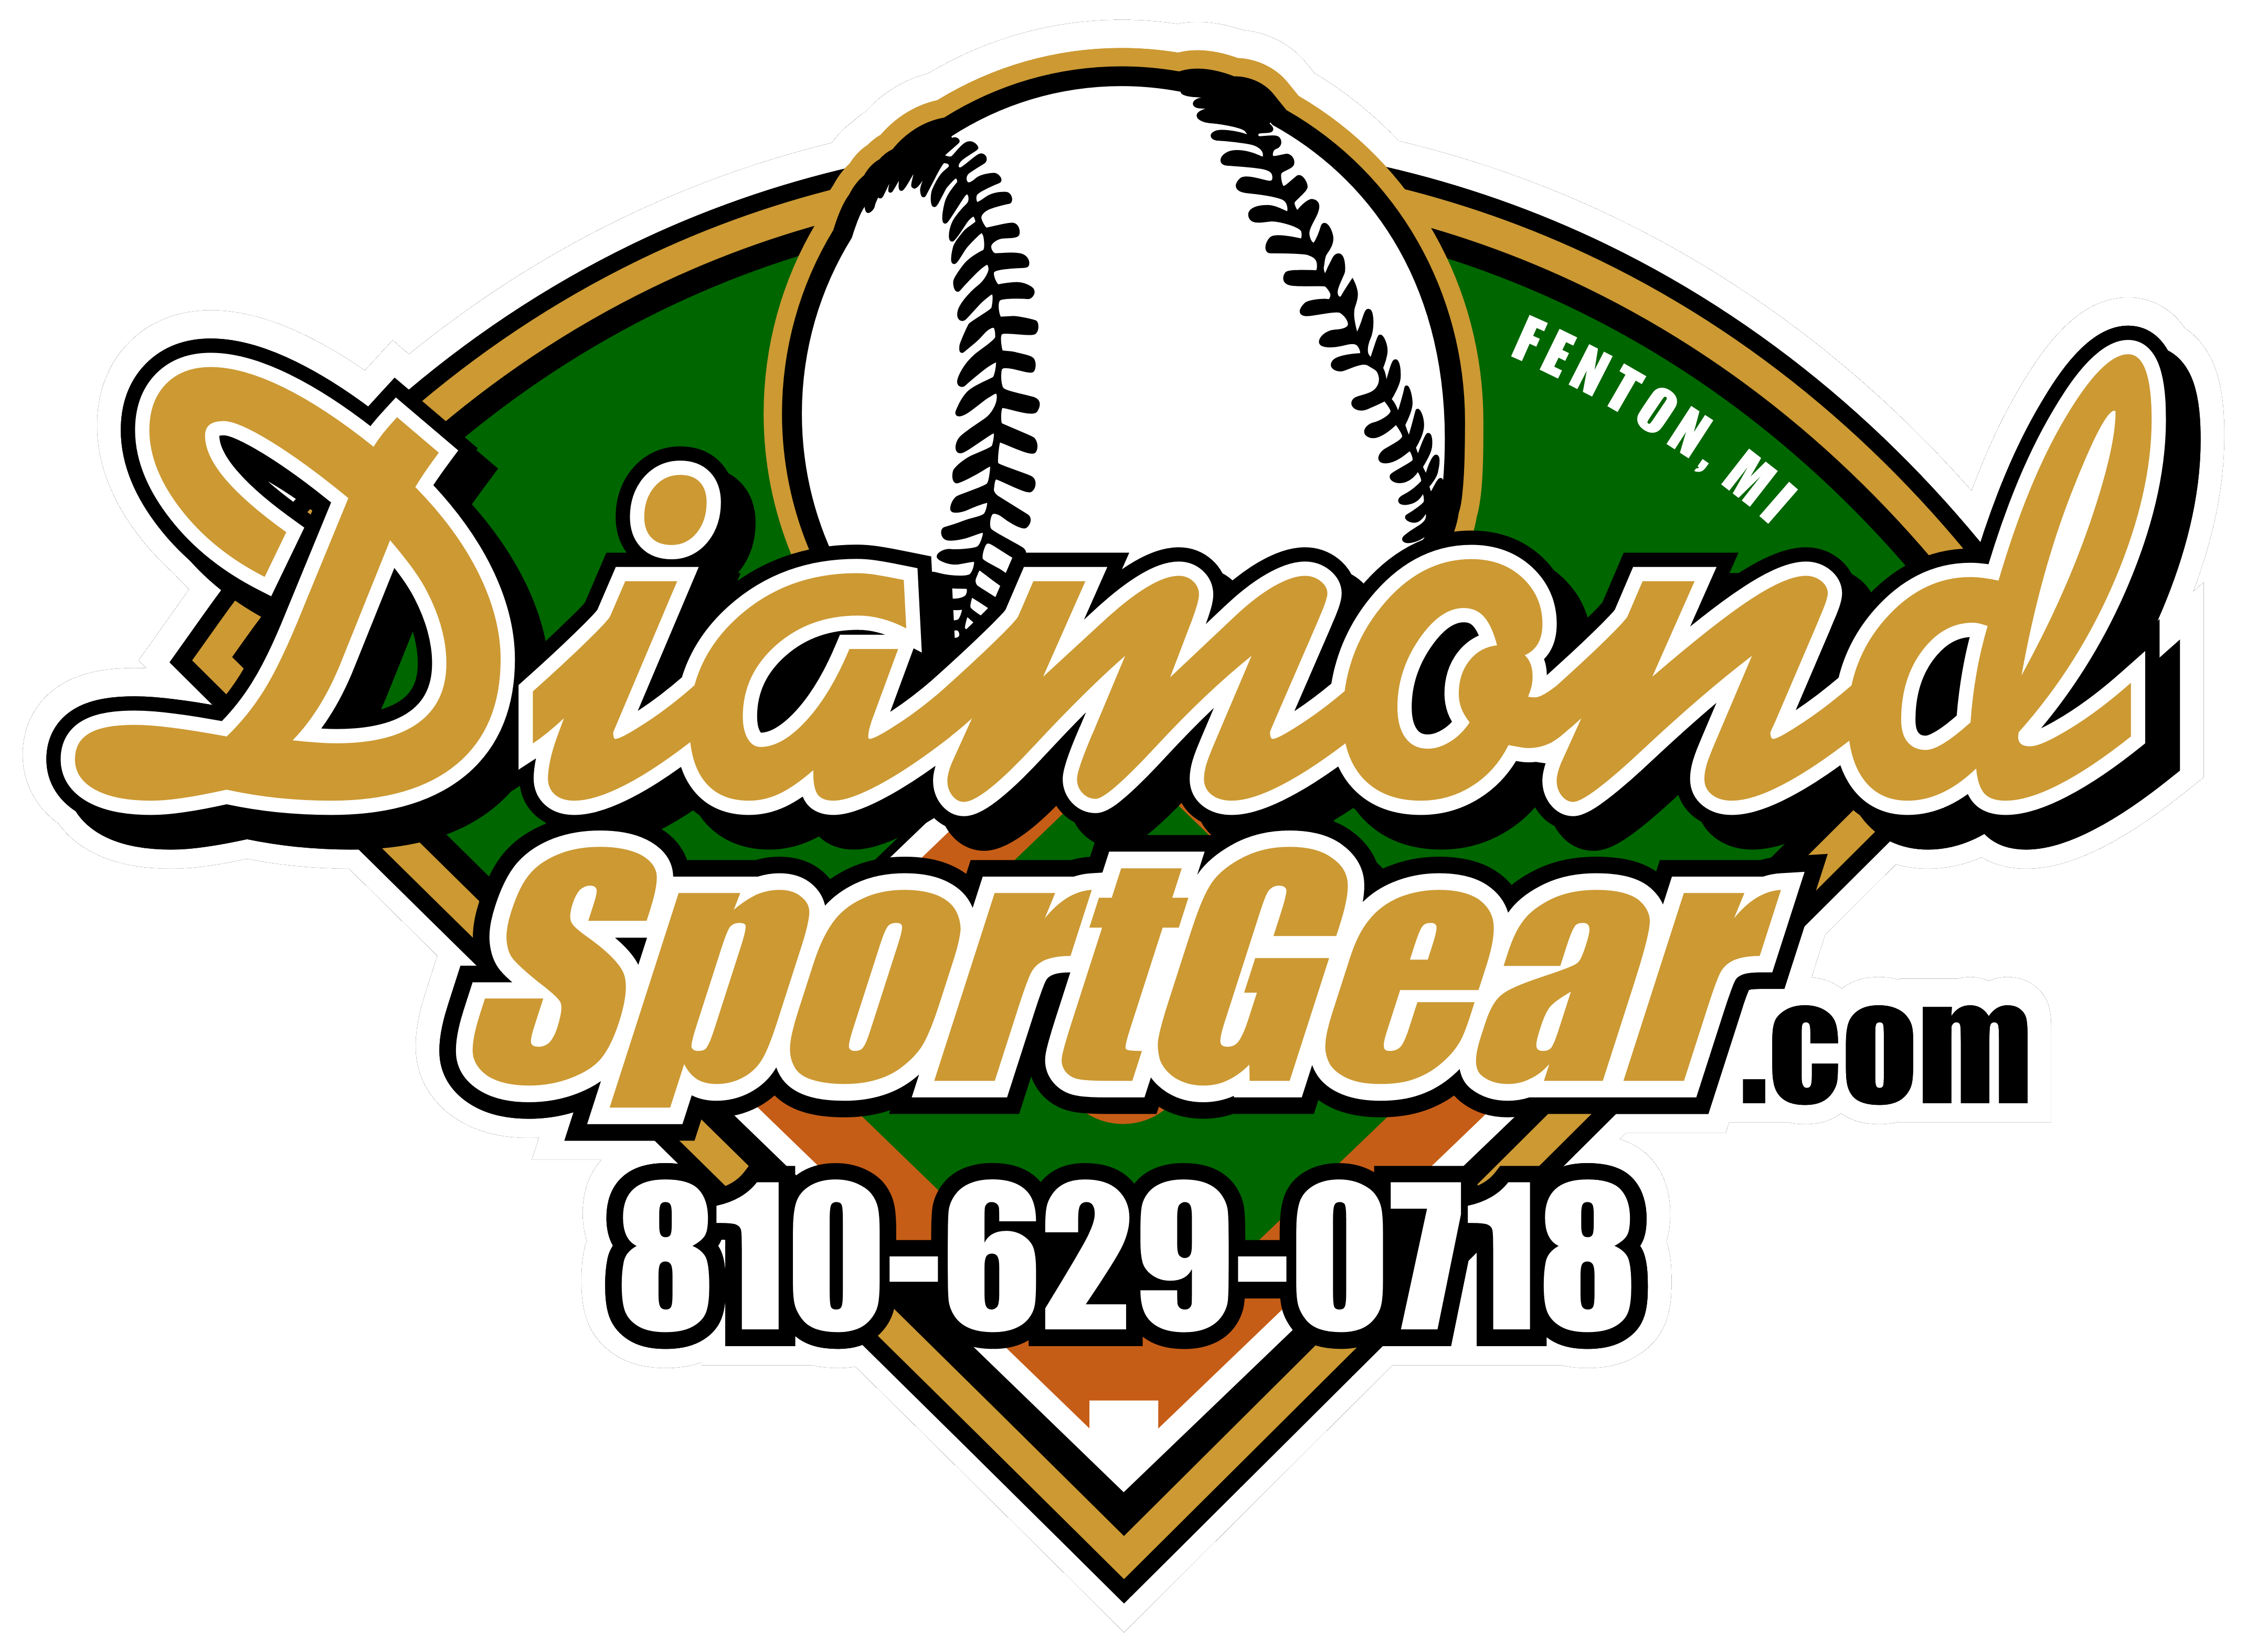 www.diamondsportgear.com